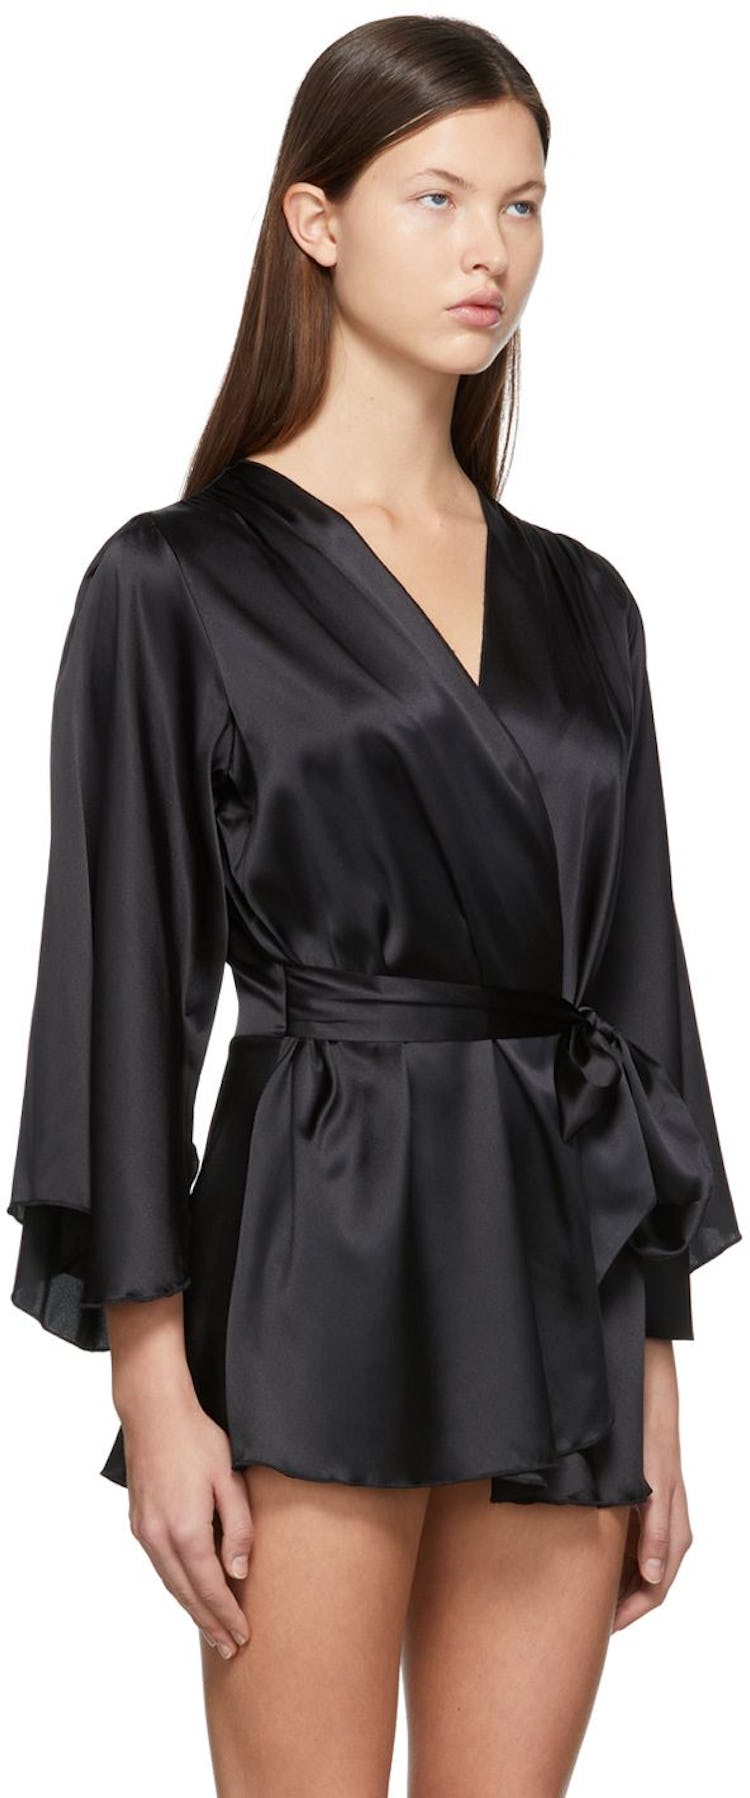 Black Angel Sleeve Robe: additional image